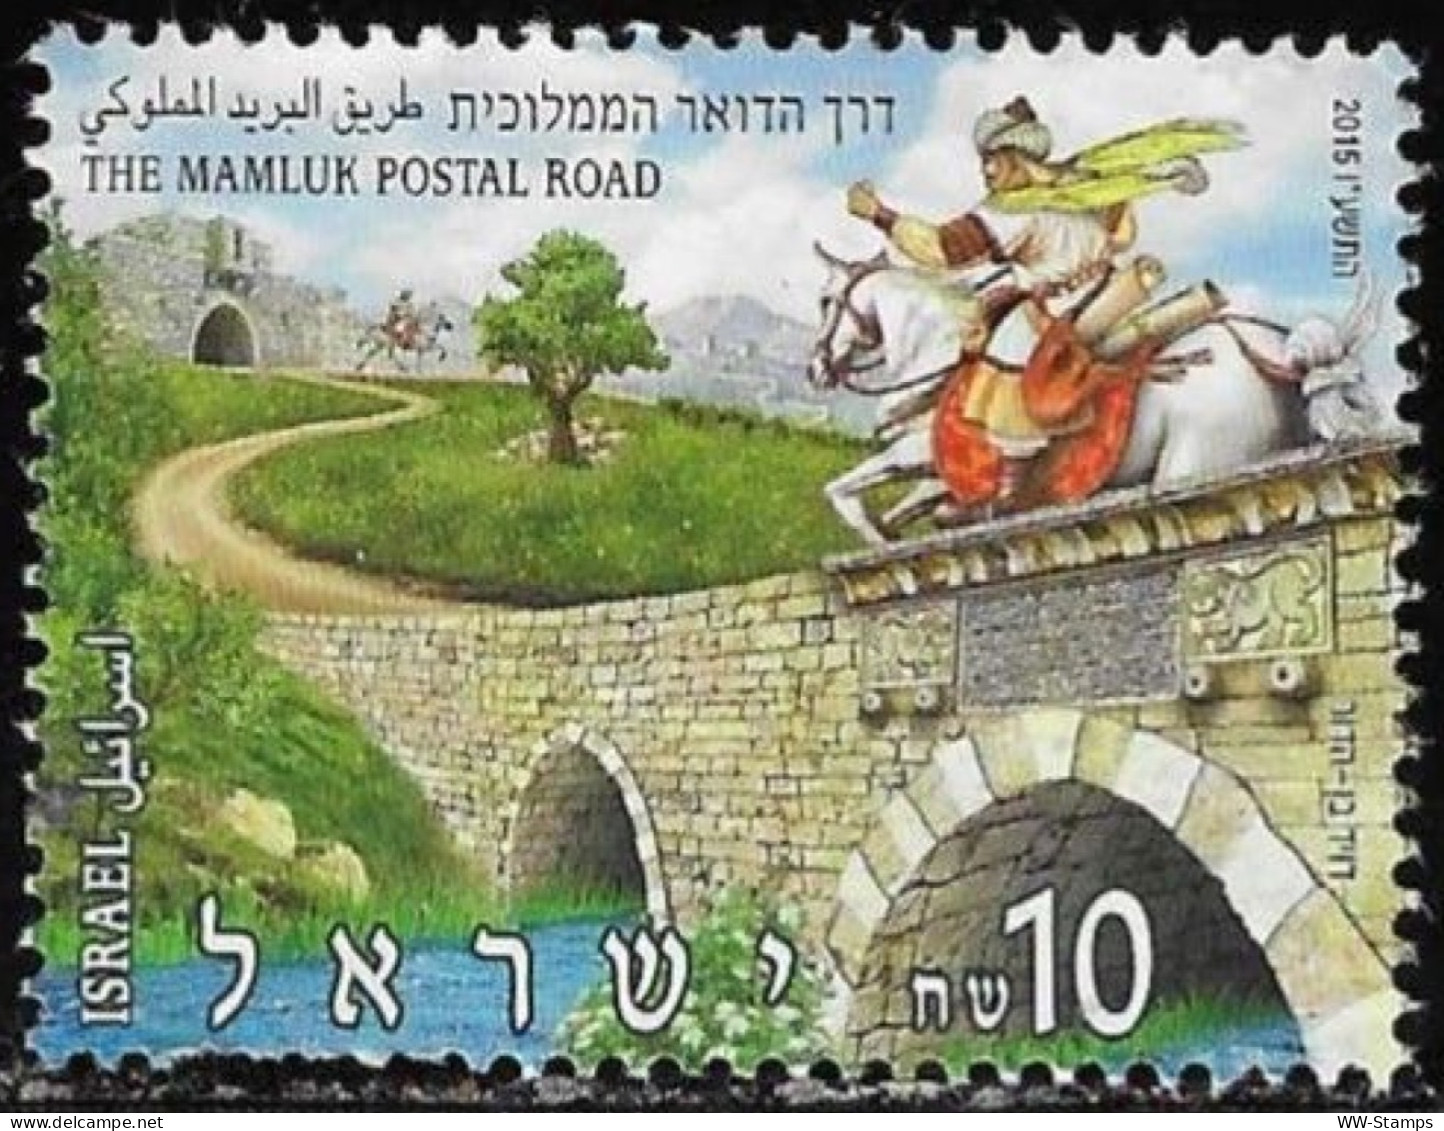 Israel 2015 Used Stamp The Mamluk Postal Road Philately Day [INLT42] - Usados (sin Tab)